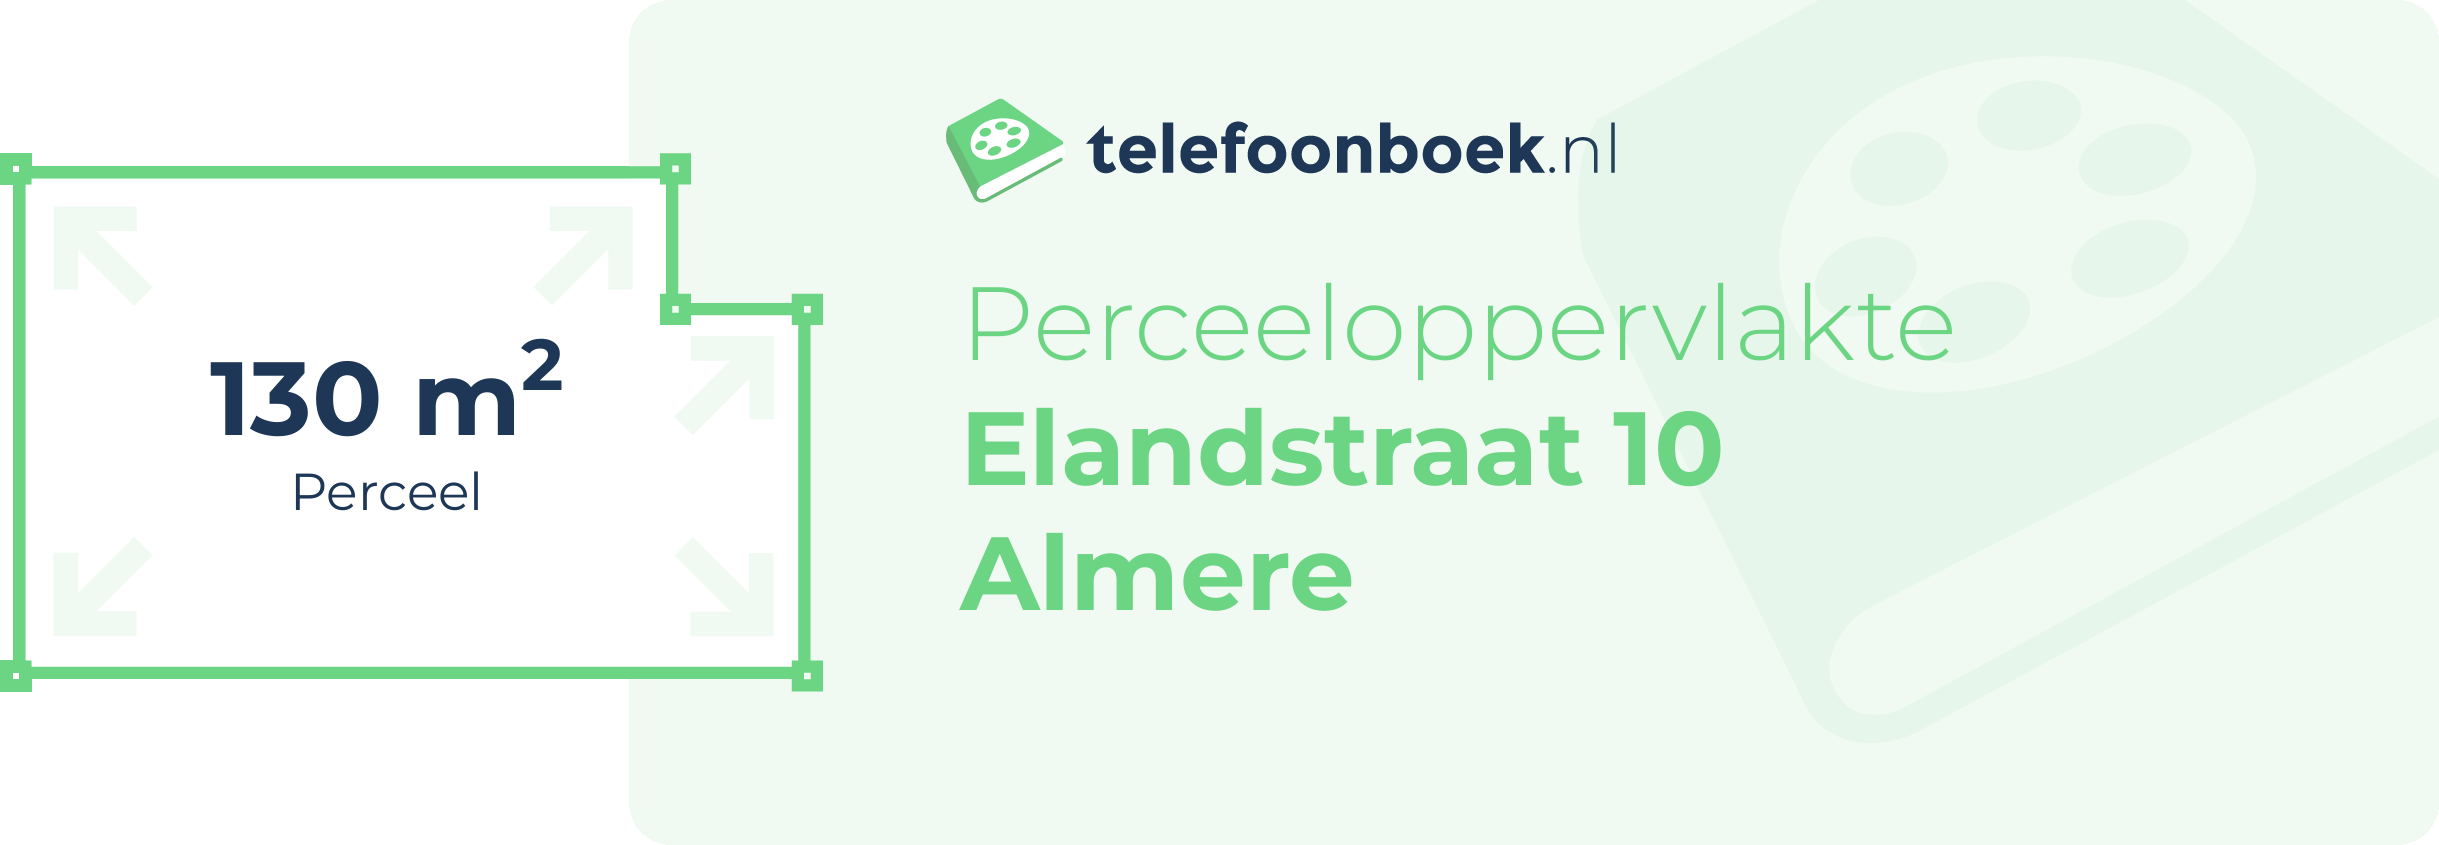 Perceeloppervlakte Elandstraat 10 Almere